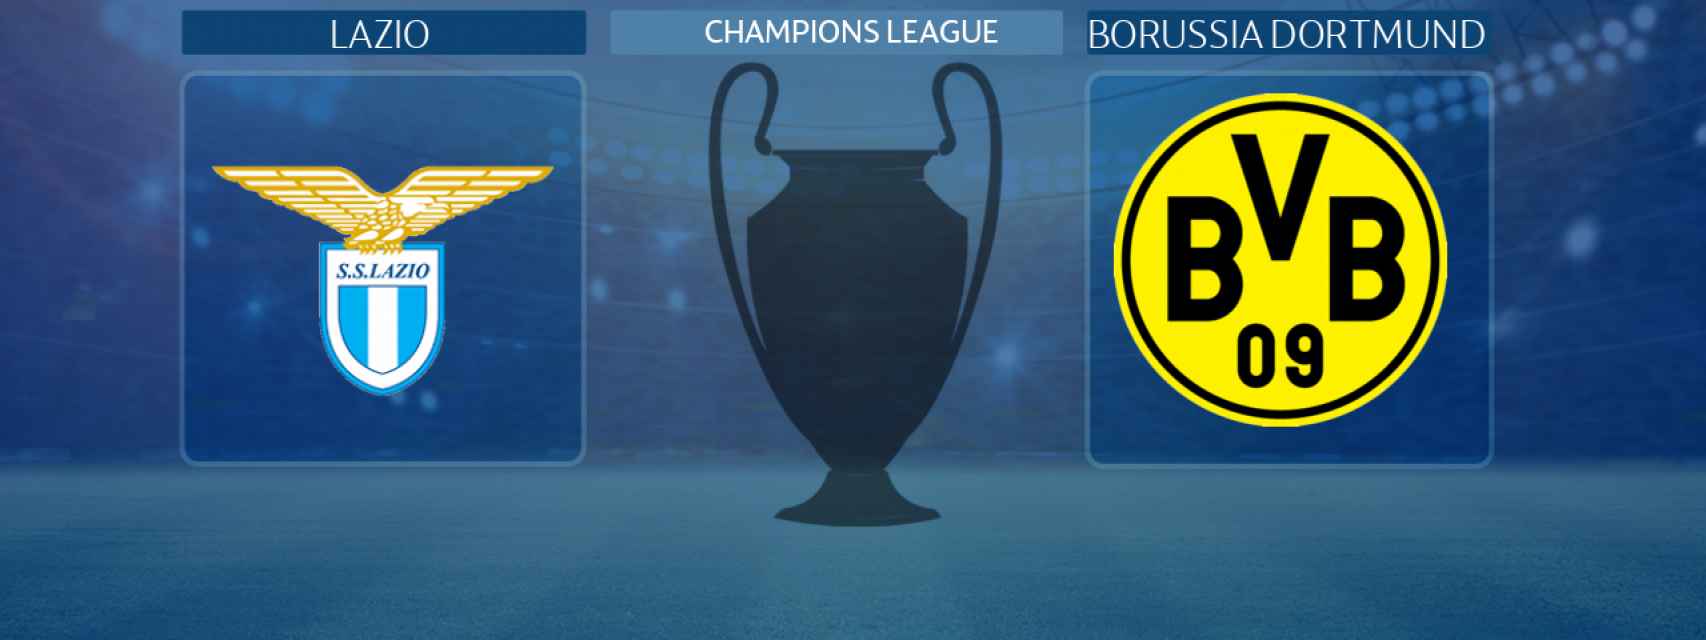 Lazio 3-1 Borussia Dortmund: y